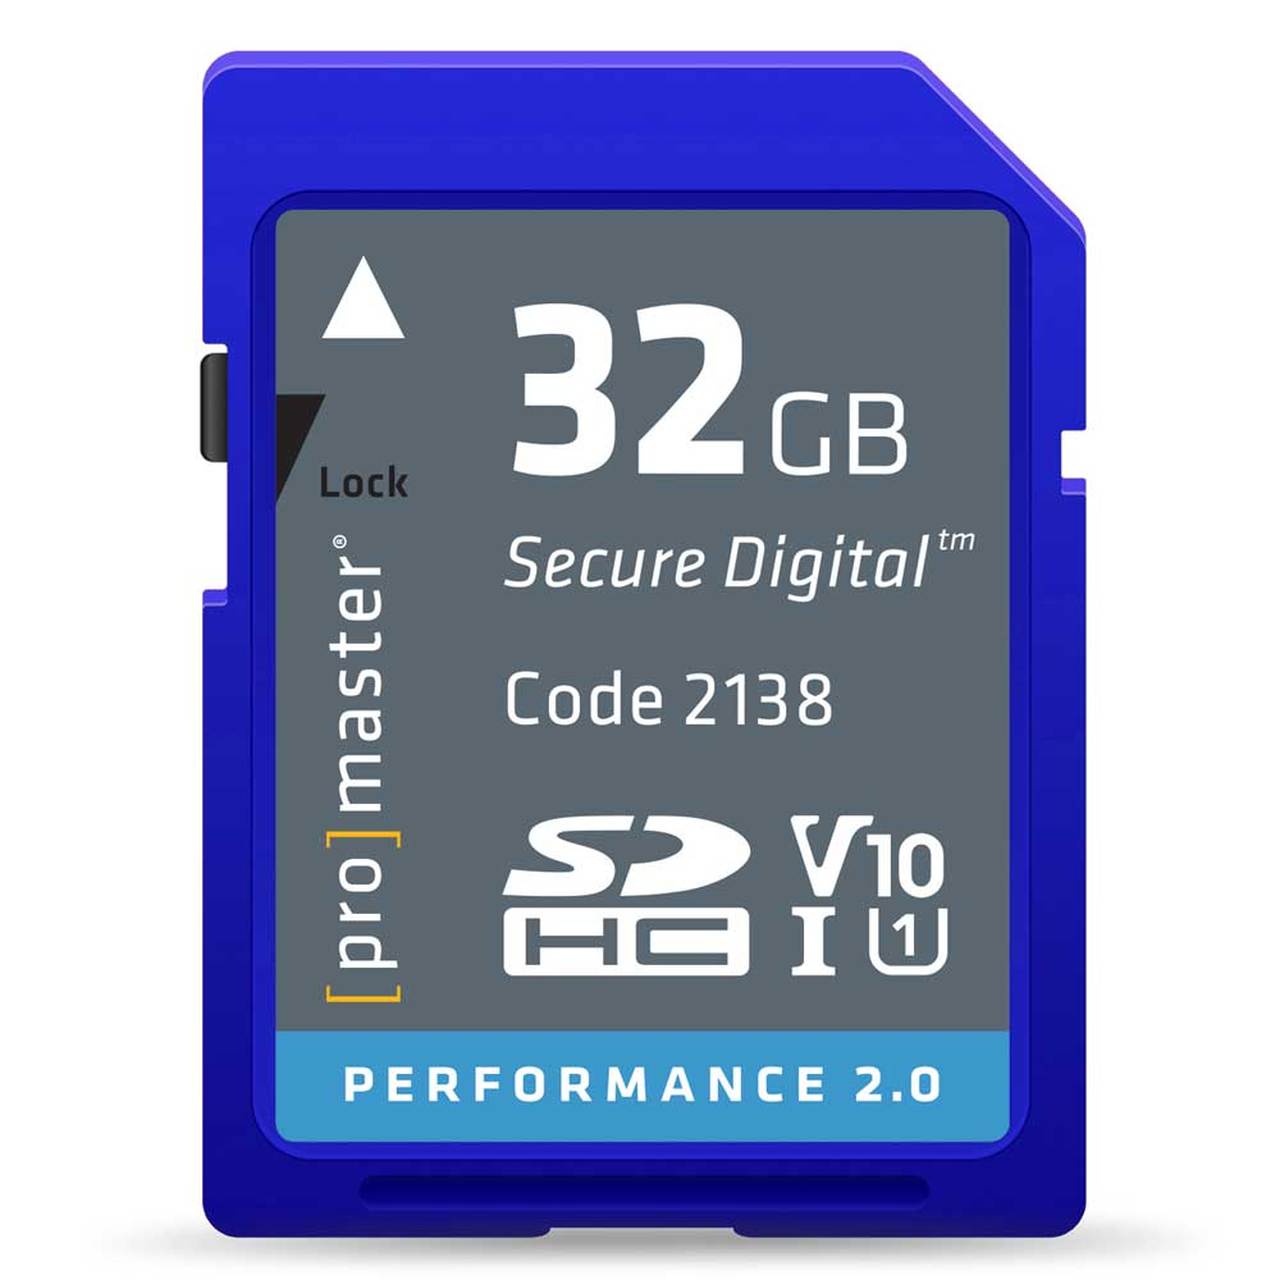 Promaster 2138 SDHC 32GB V10 Performance 2.0